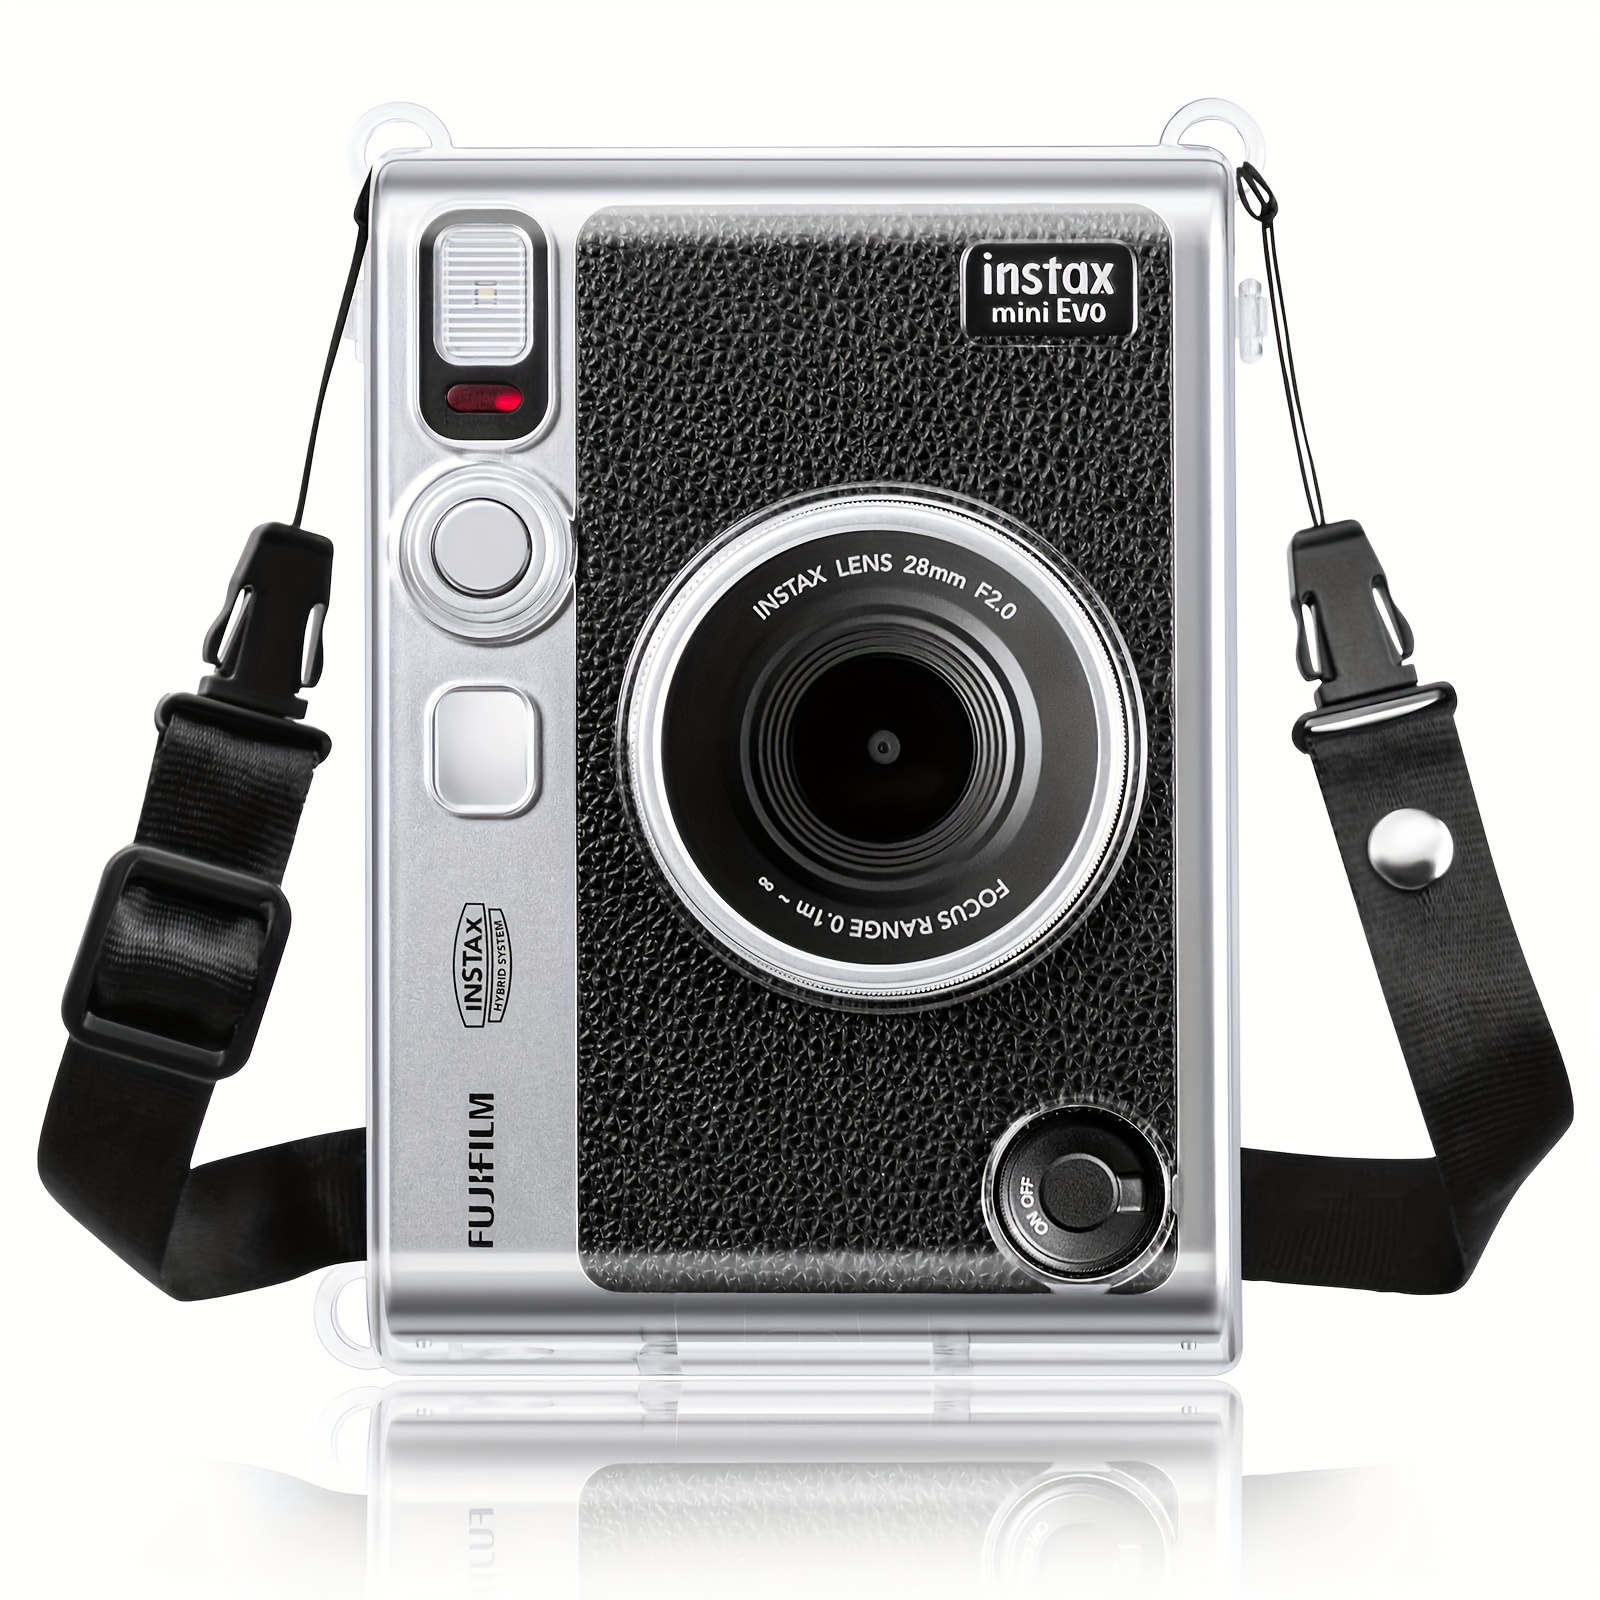 Fujifilm Papel Fotográfico Instax Mini Film Transparente